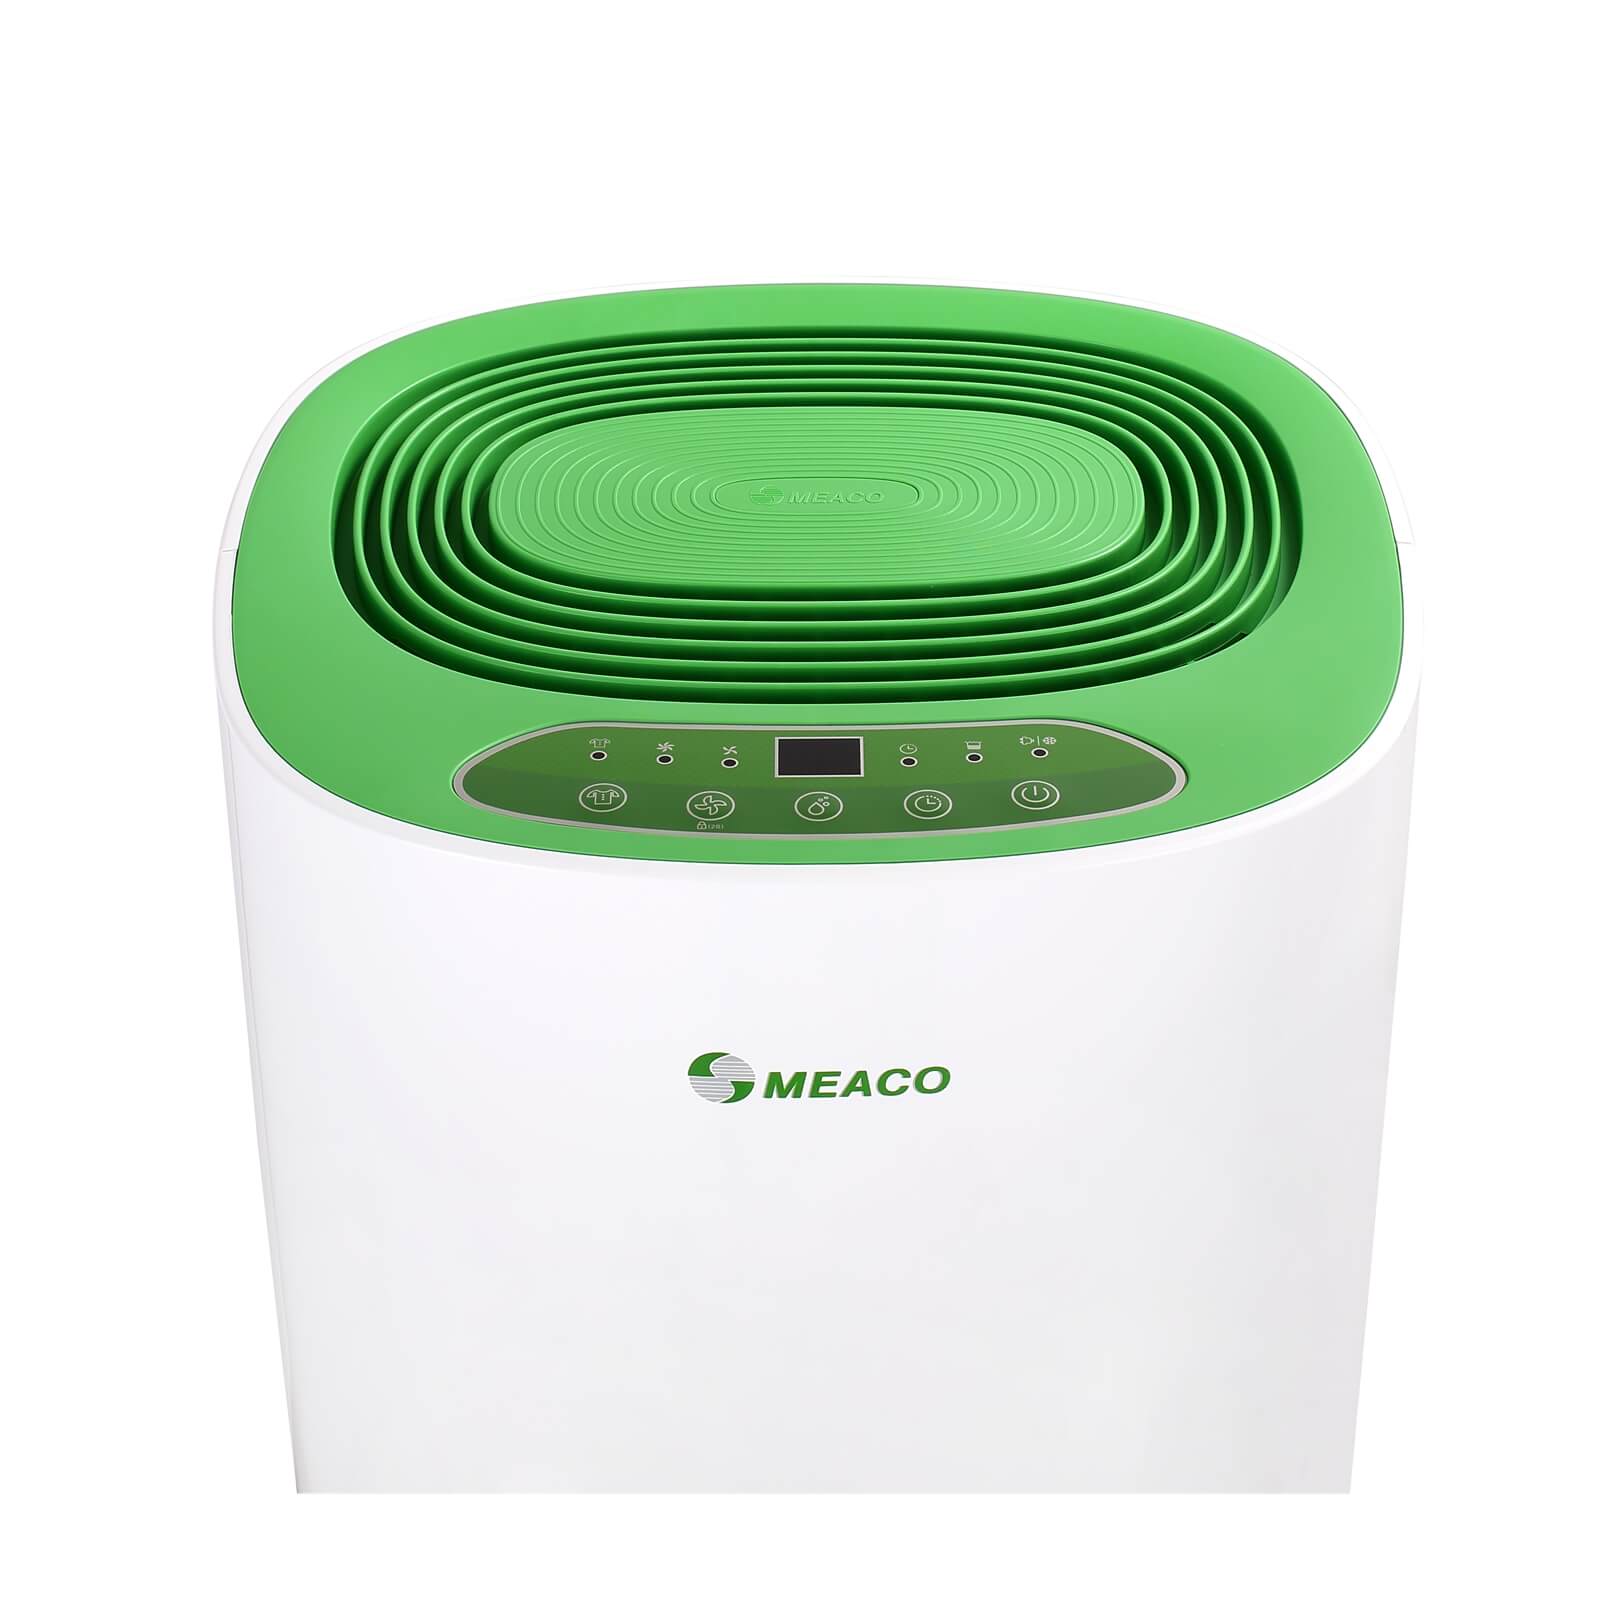 Meaco Dry ABC 12L Dehumidifier - Green